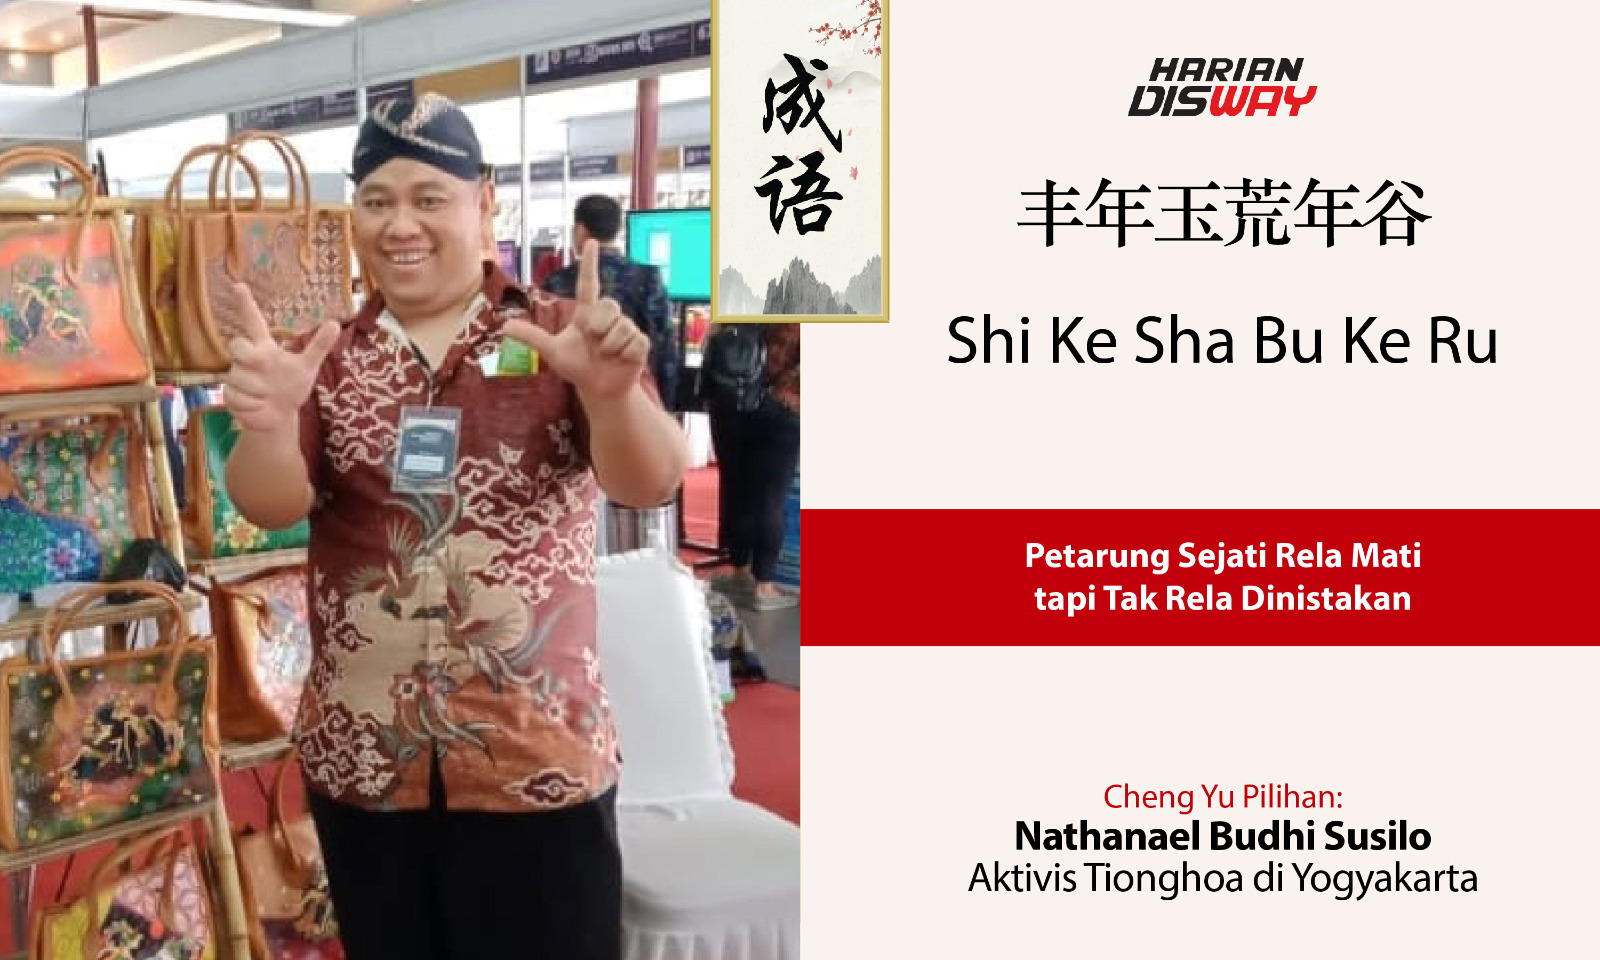 Cheng Yu Pilihan Aktivis Tionghoa di Yogyakarta Nathanael Budhi Susilo: Shi Ke Sha Bu Ke Ru